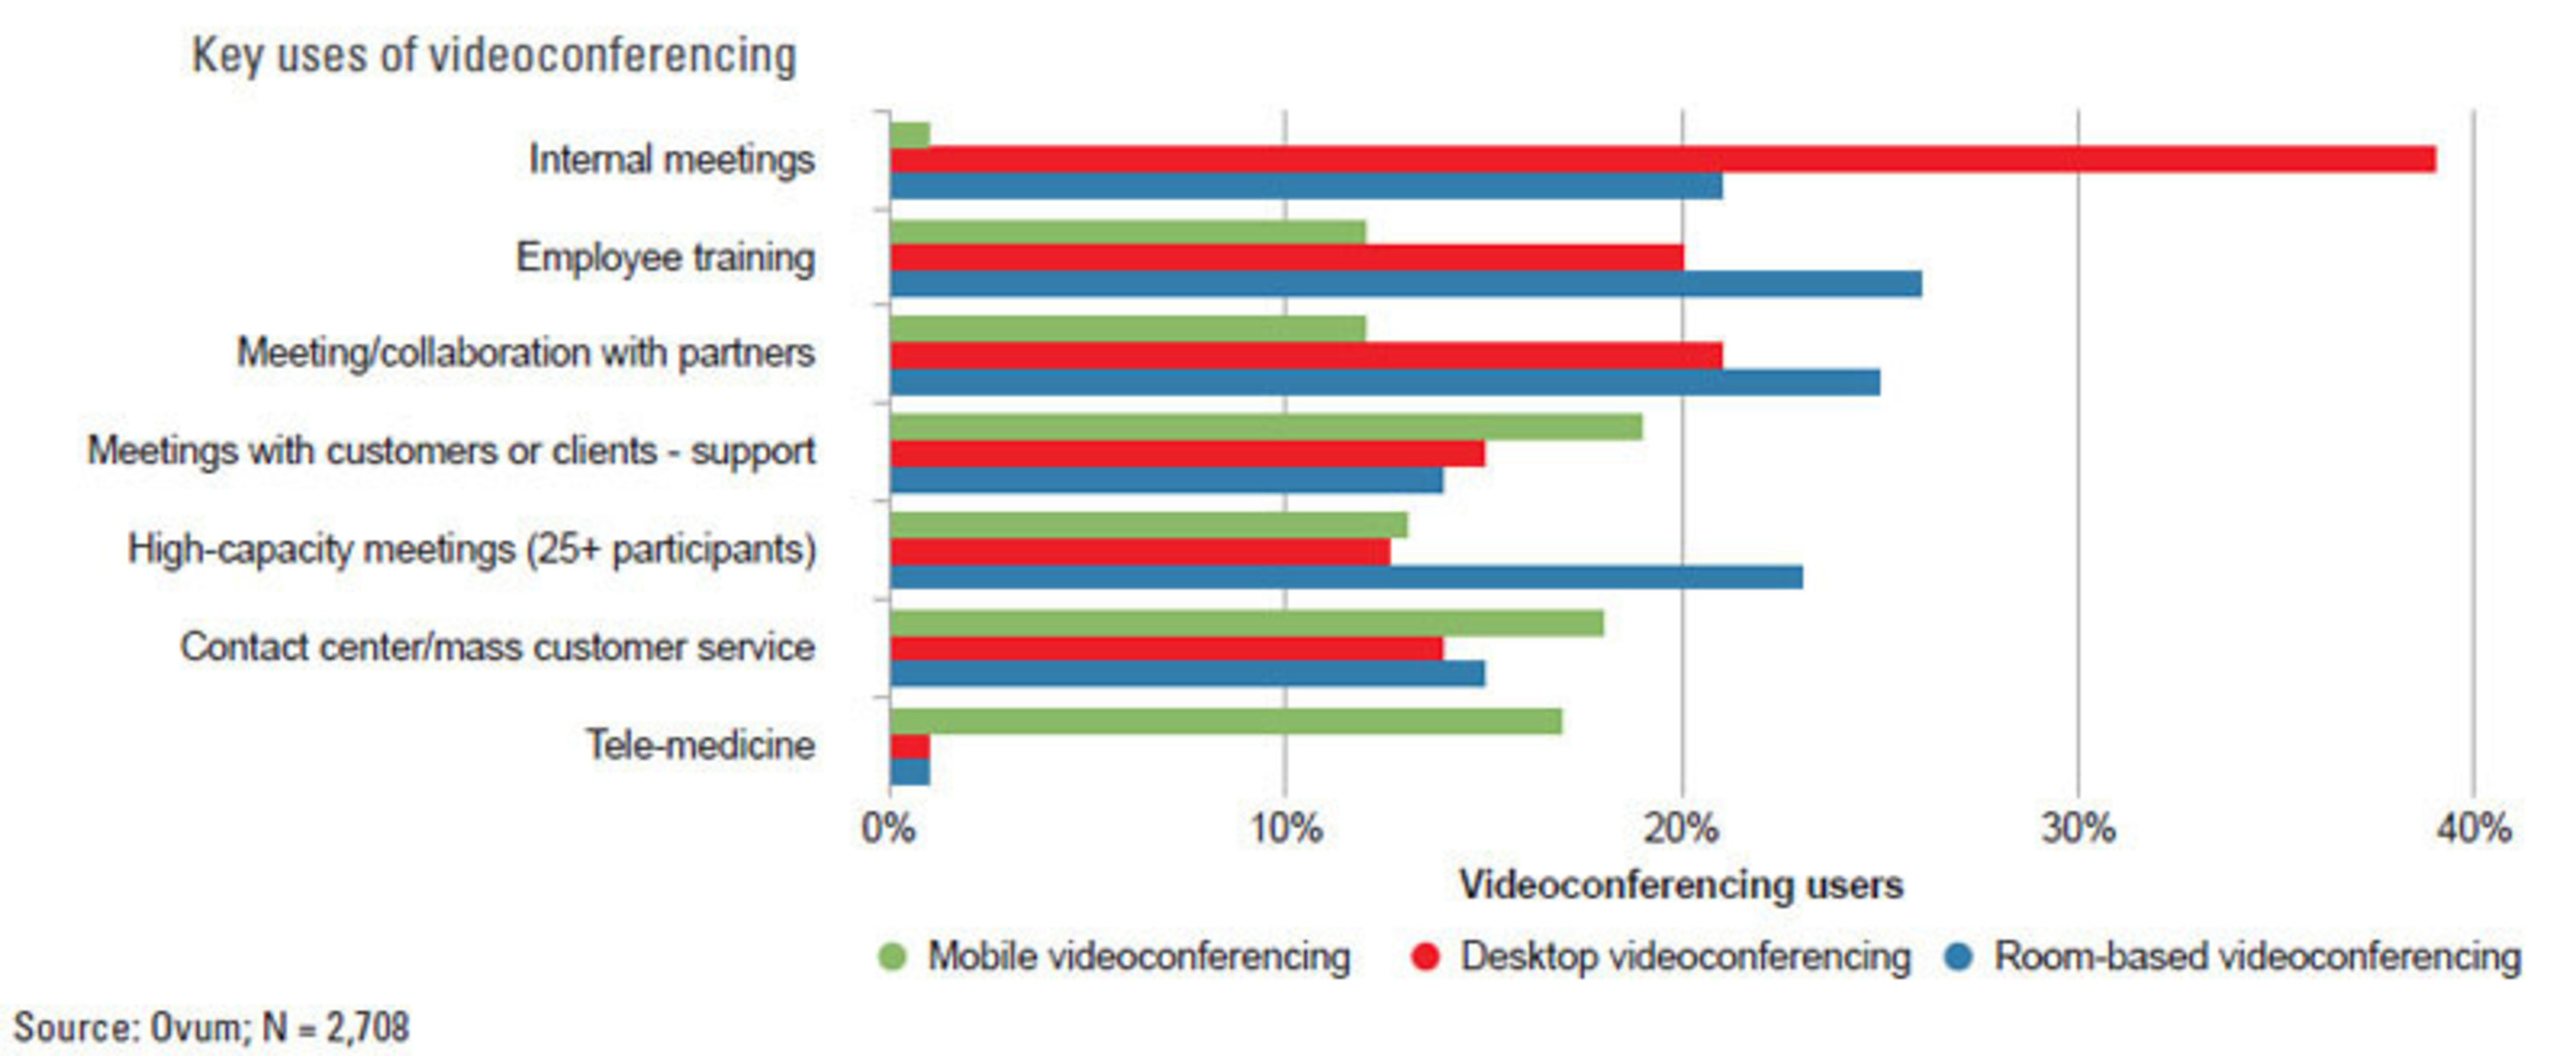 Key uses of videoconferencing